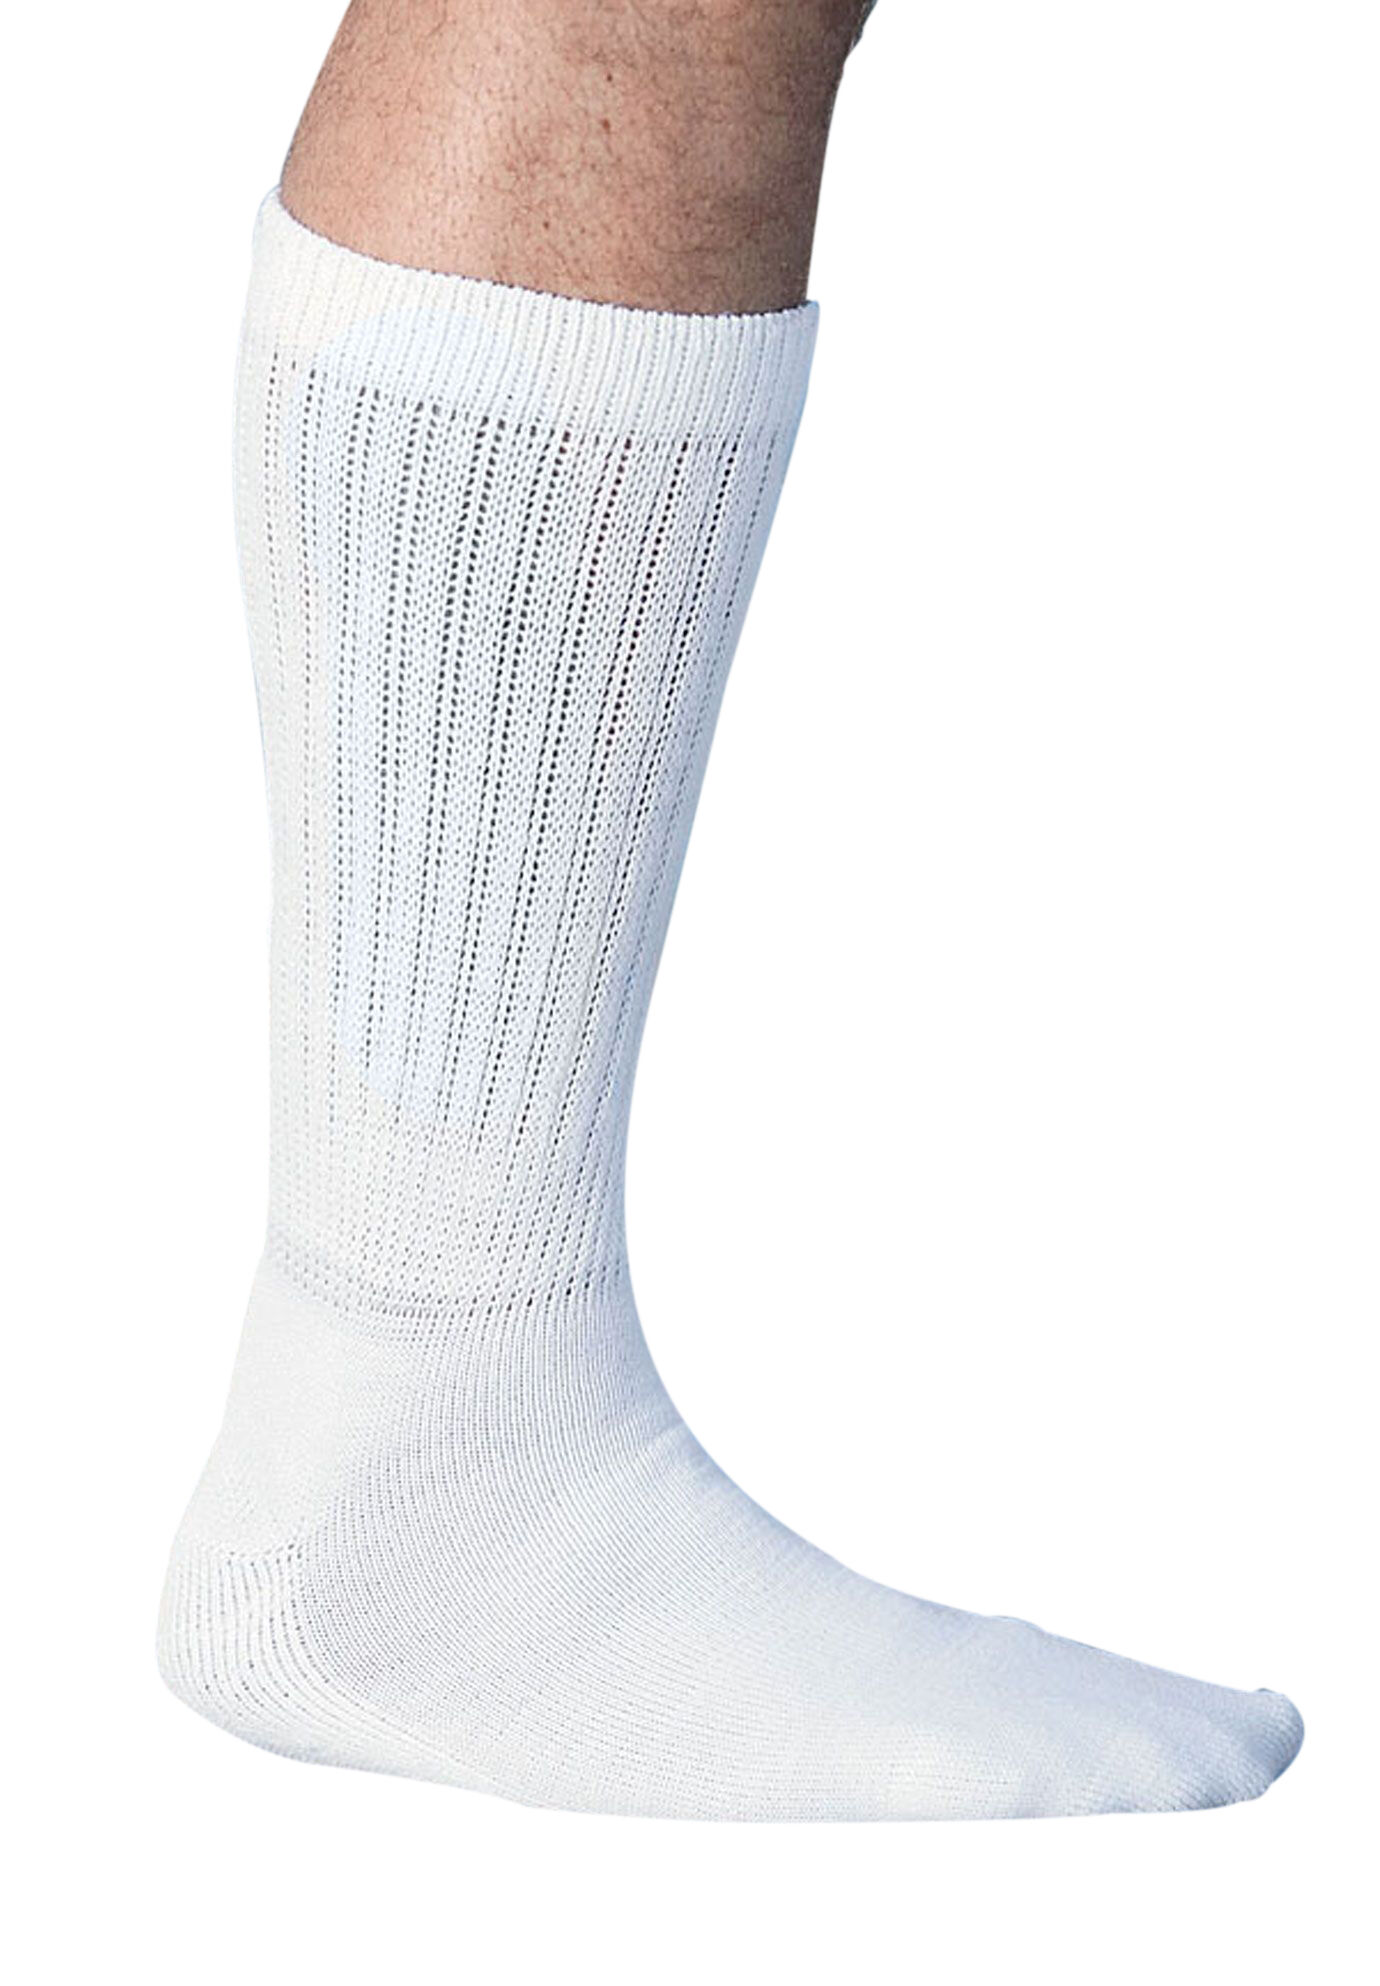 KingSize Mens Big & Tall Over-The-Calf Compression Silver Socks 